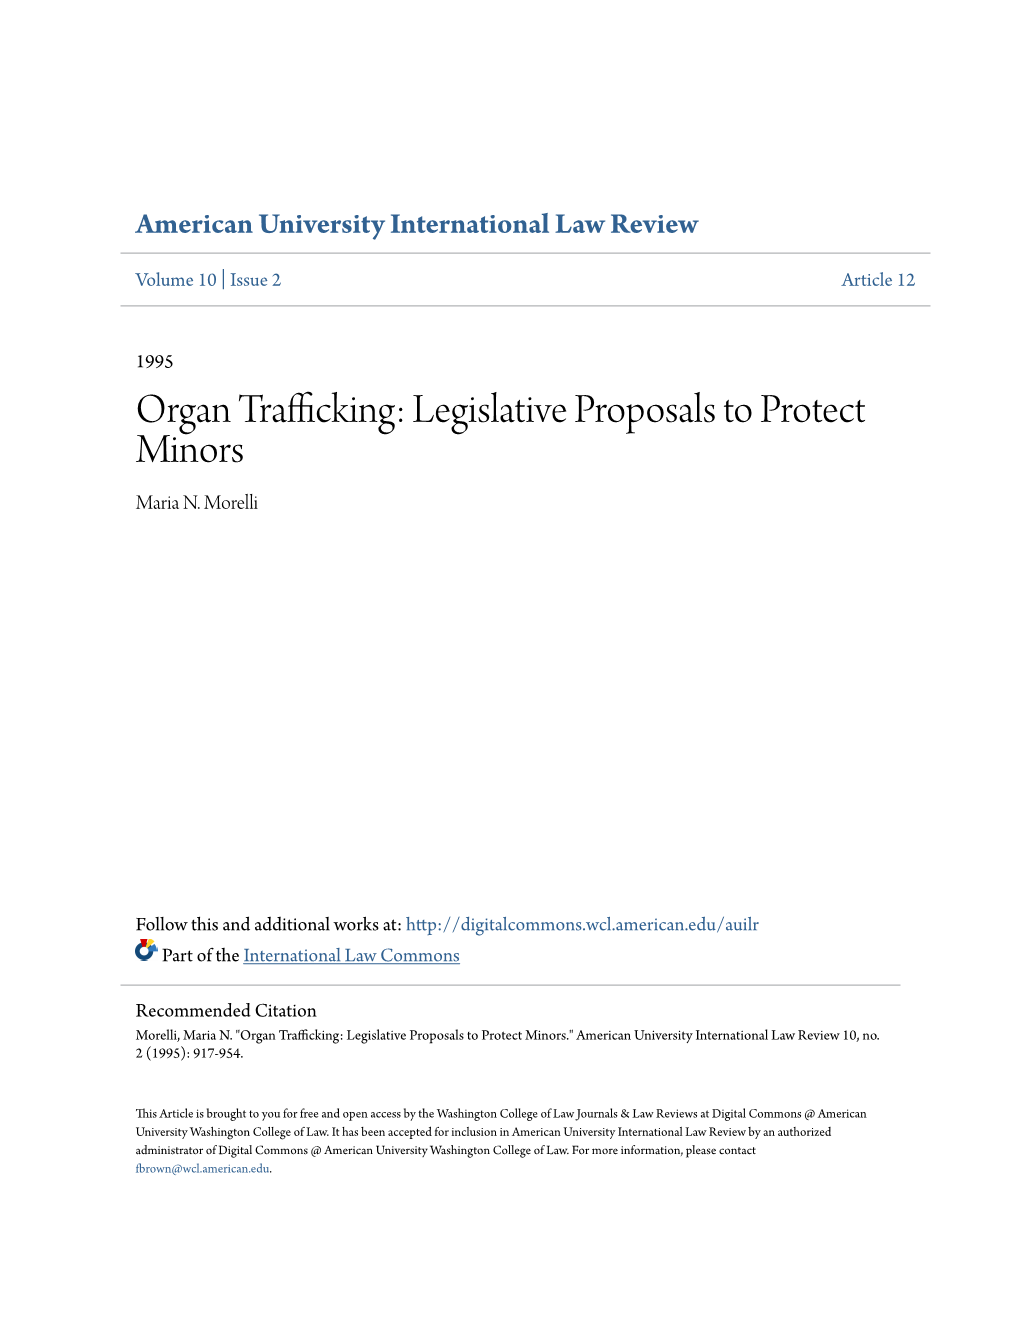 Organ Trafficking: Legislative Proposals to Protect Minors Maria N